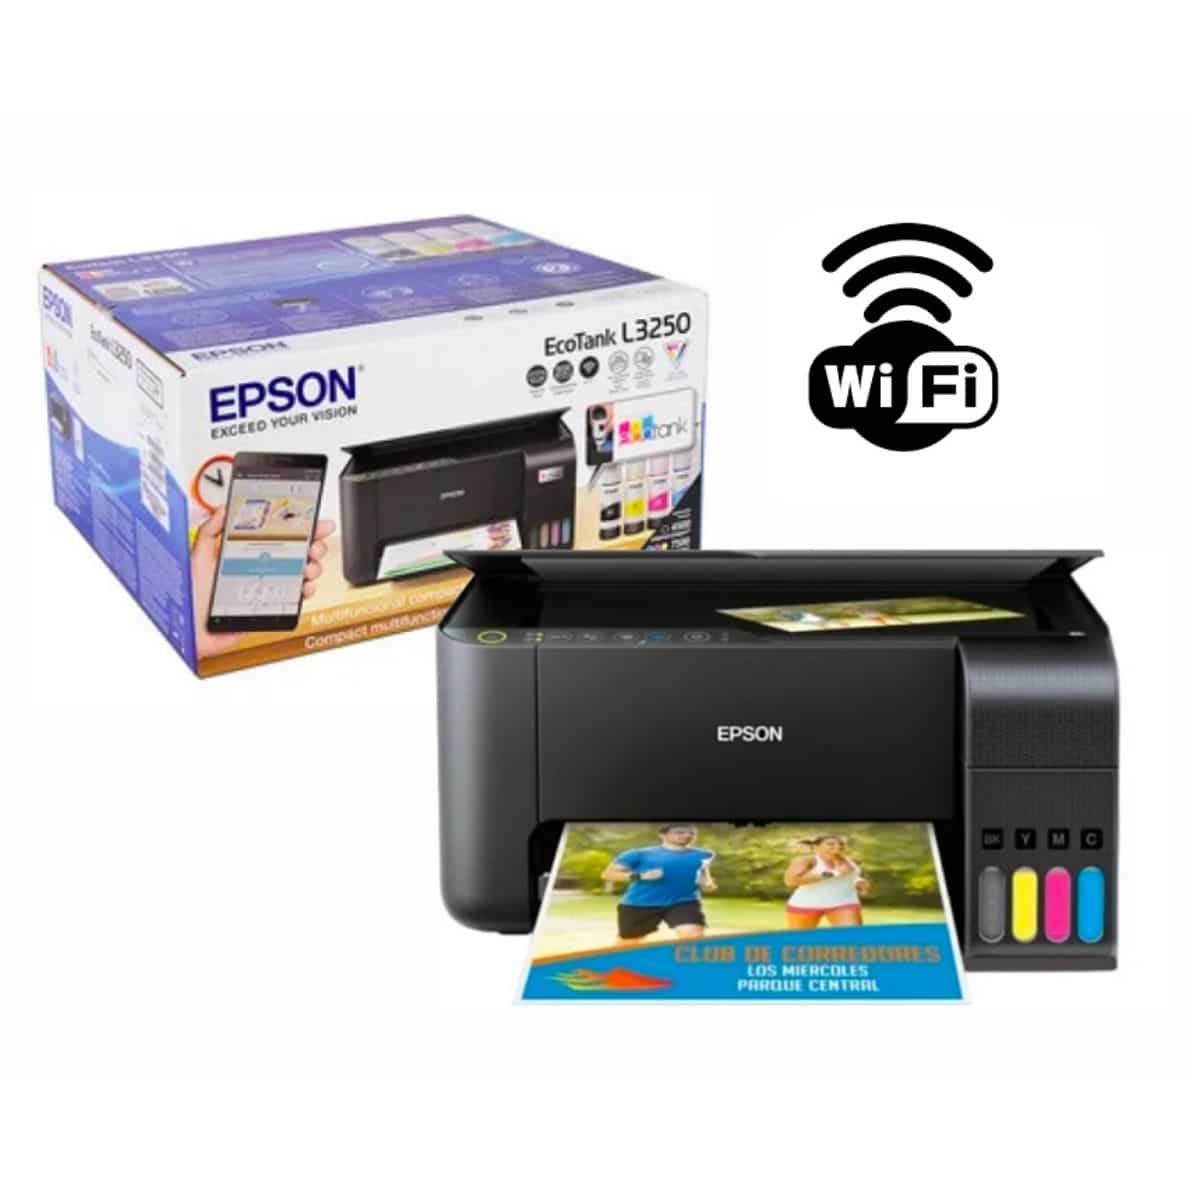 Impresora Multifuncion Epson L3250 Ecotank Wifi C